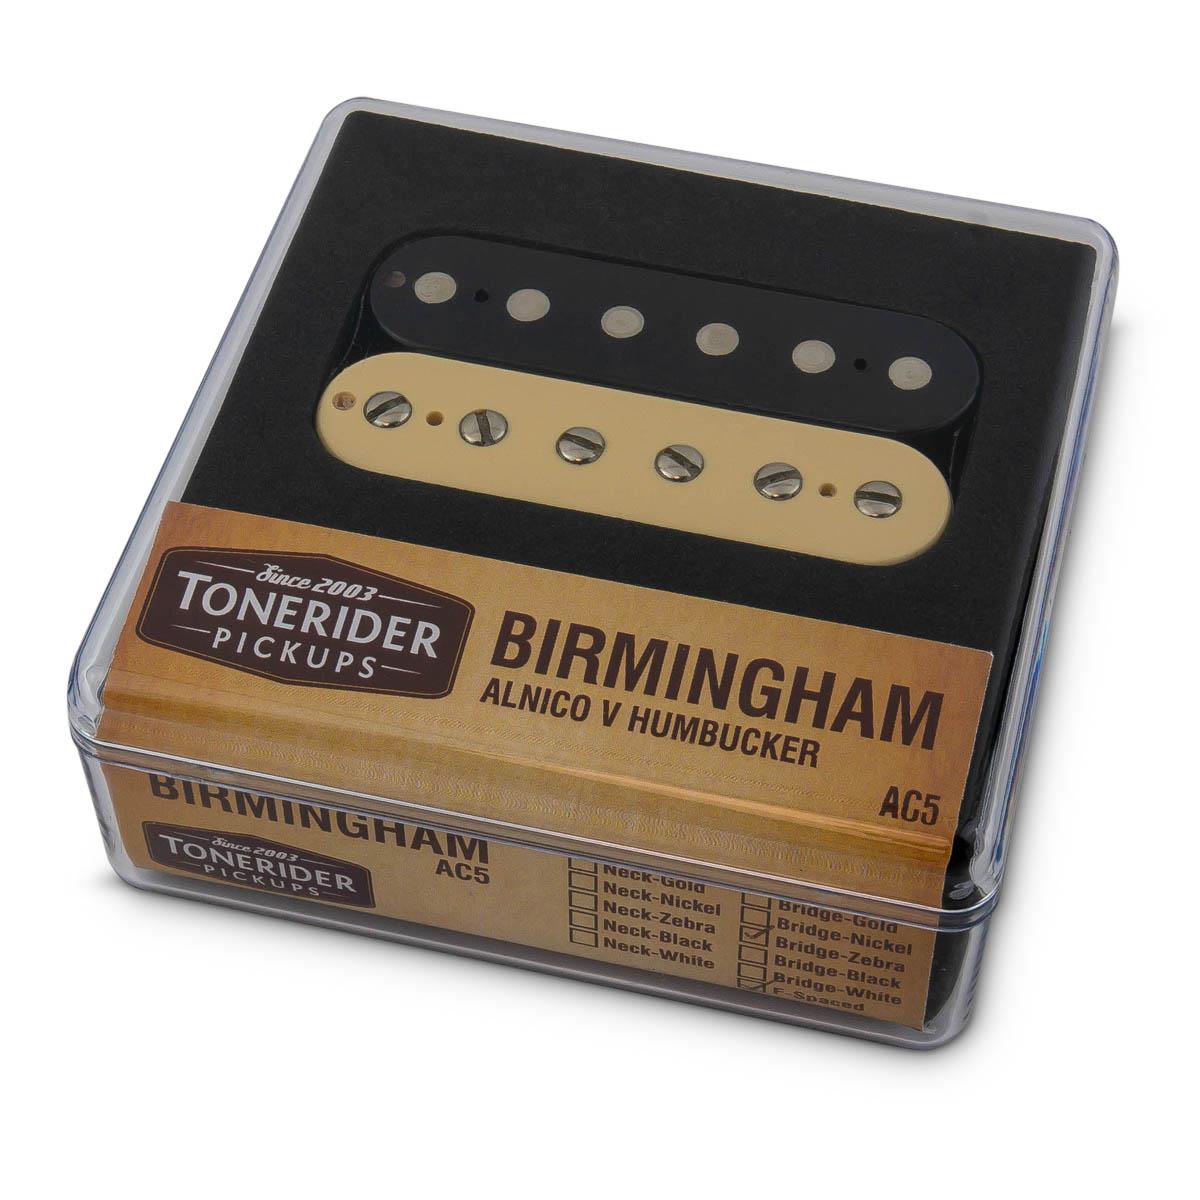 Tonerider AC5 Birmingham Humbucker Guitar Pickups with Alnico V Magnets